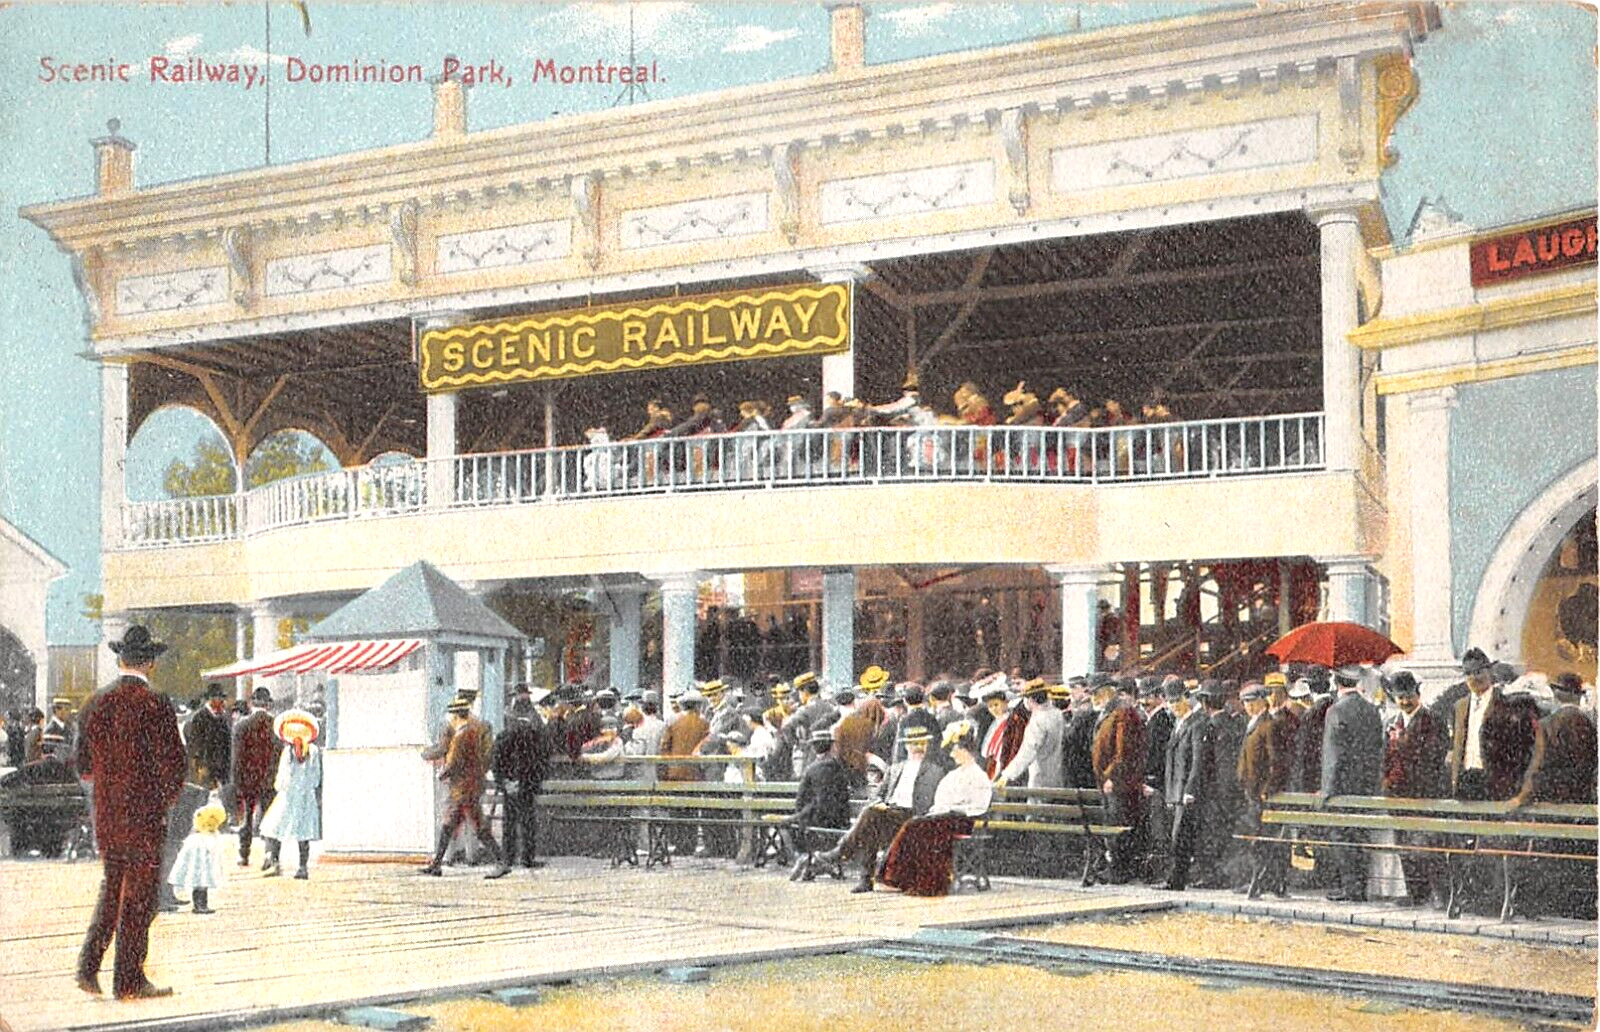 c.1910 Scenic Railway Dominion Park Montreal Quebec Canada post card